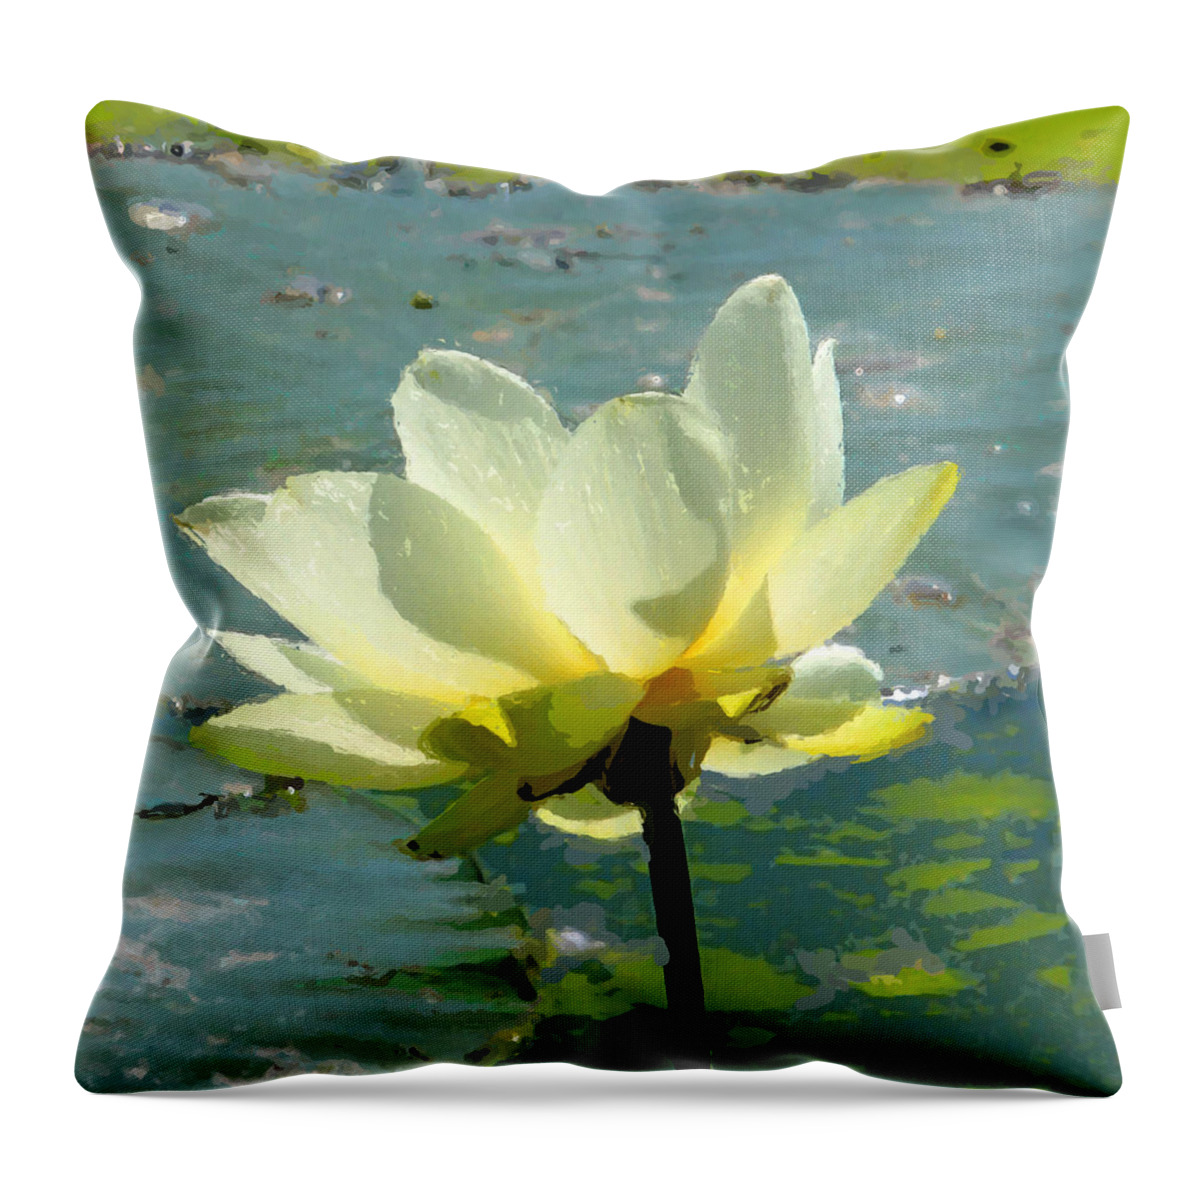 Lotus Throw Pillow featuring the photograph Imitation by John Freidenberg